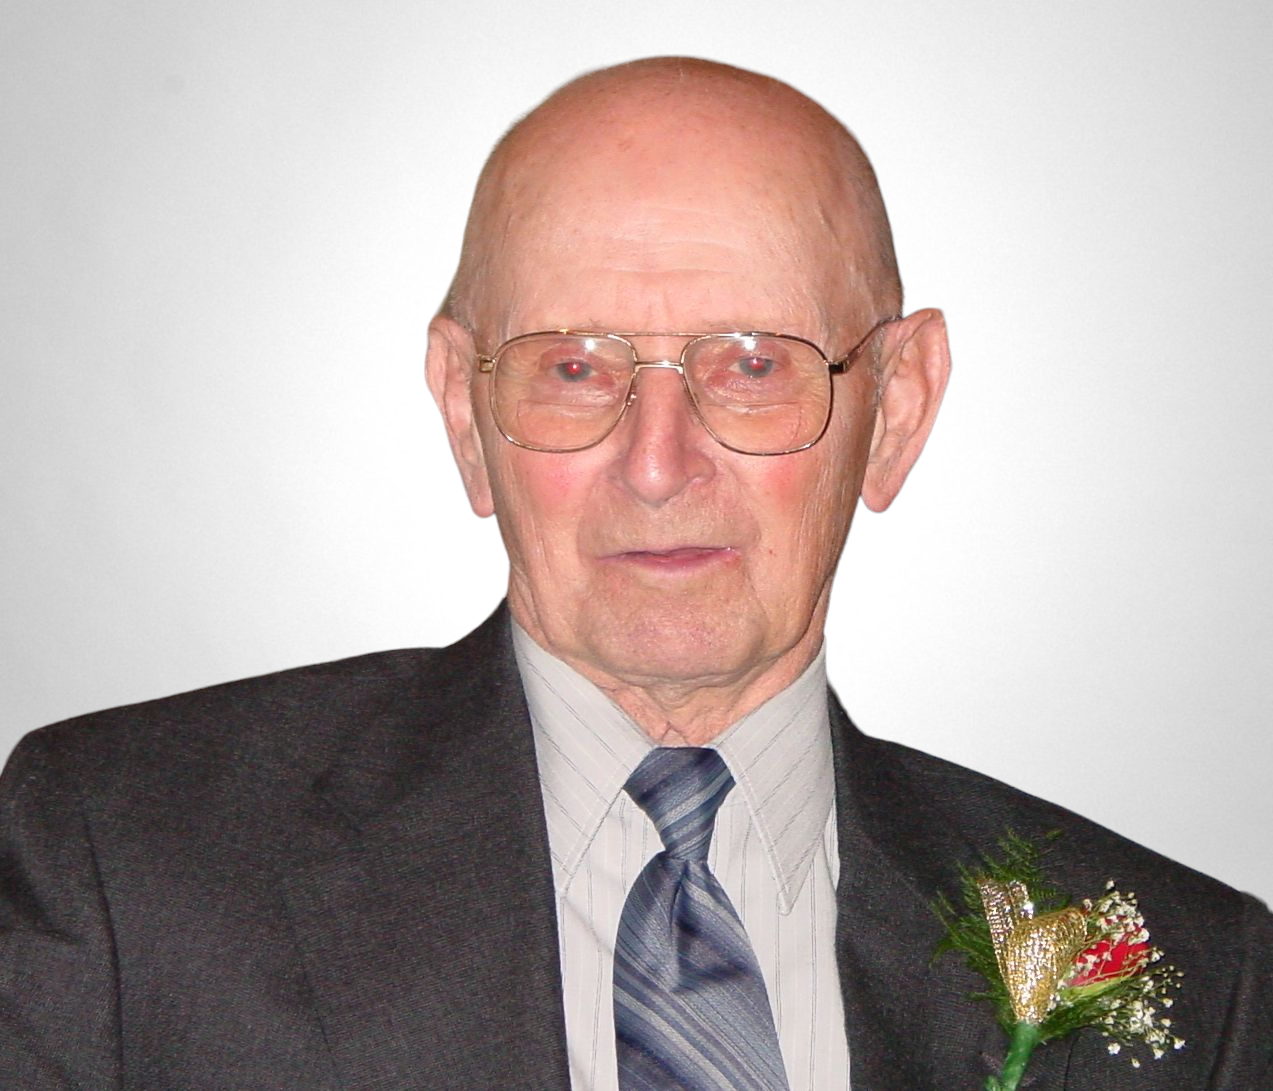 Eugene M. Green age 94